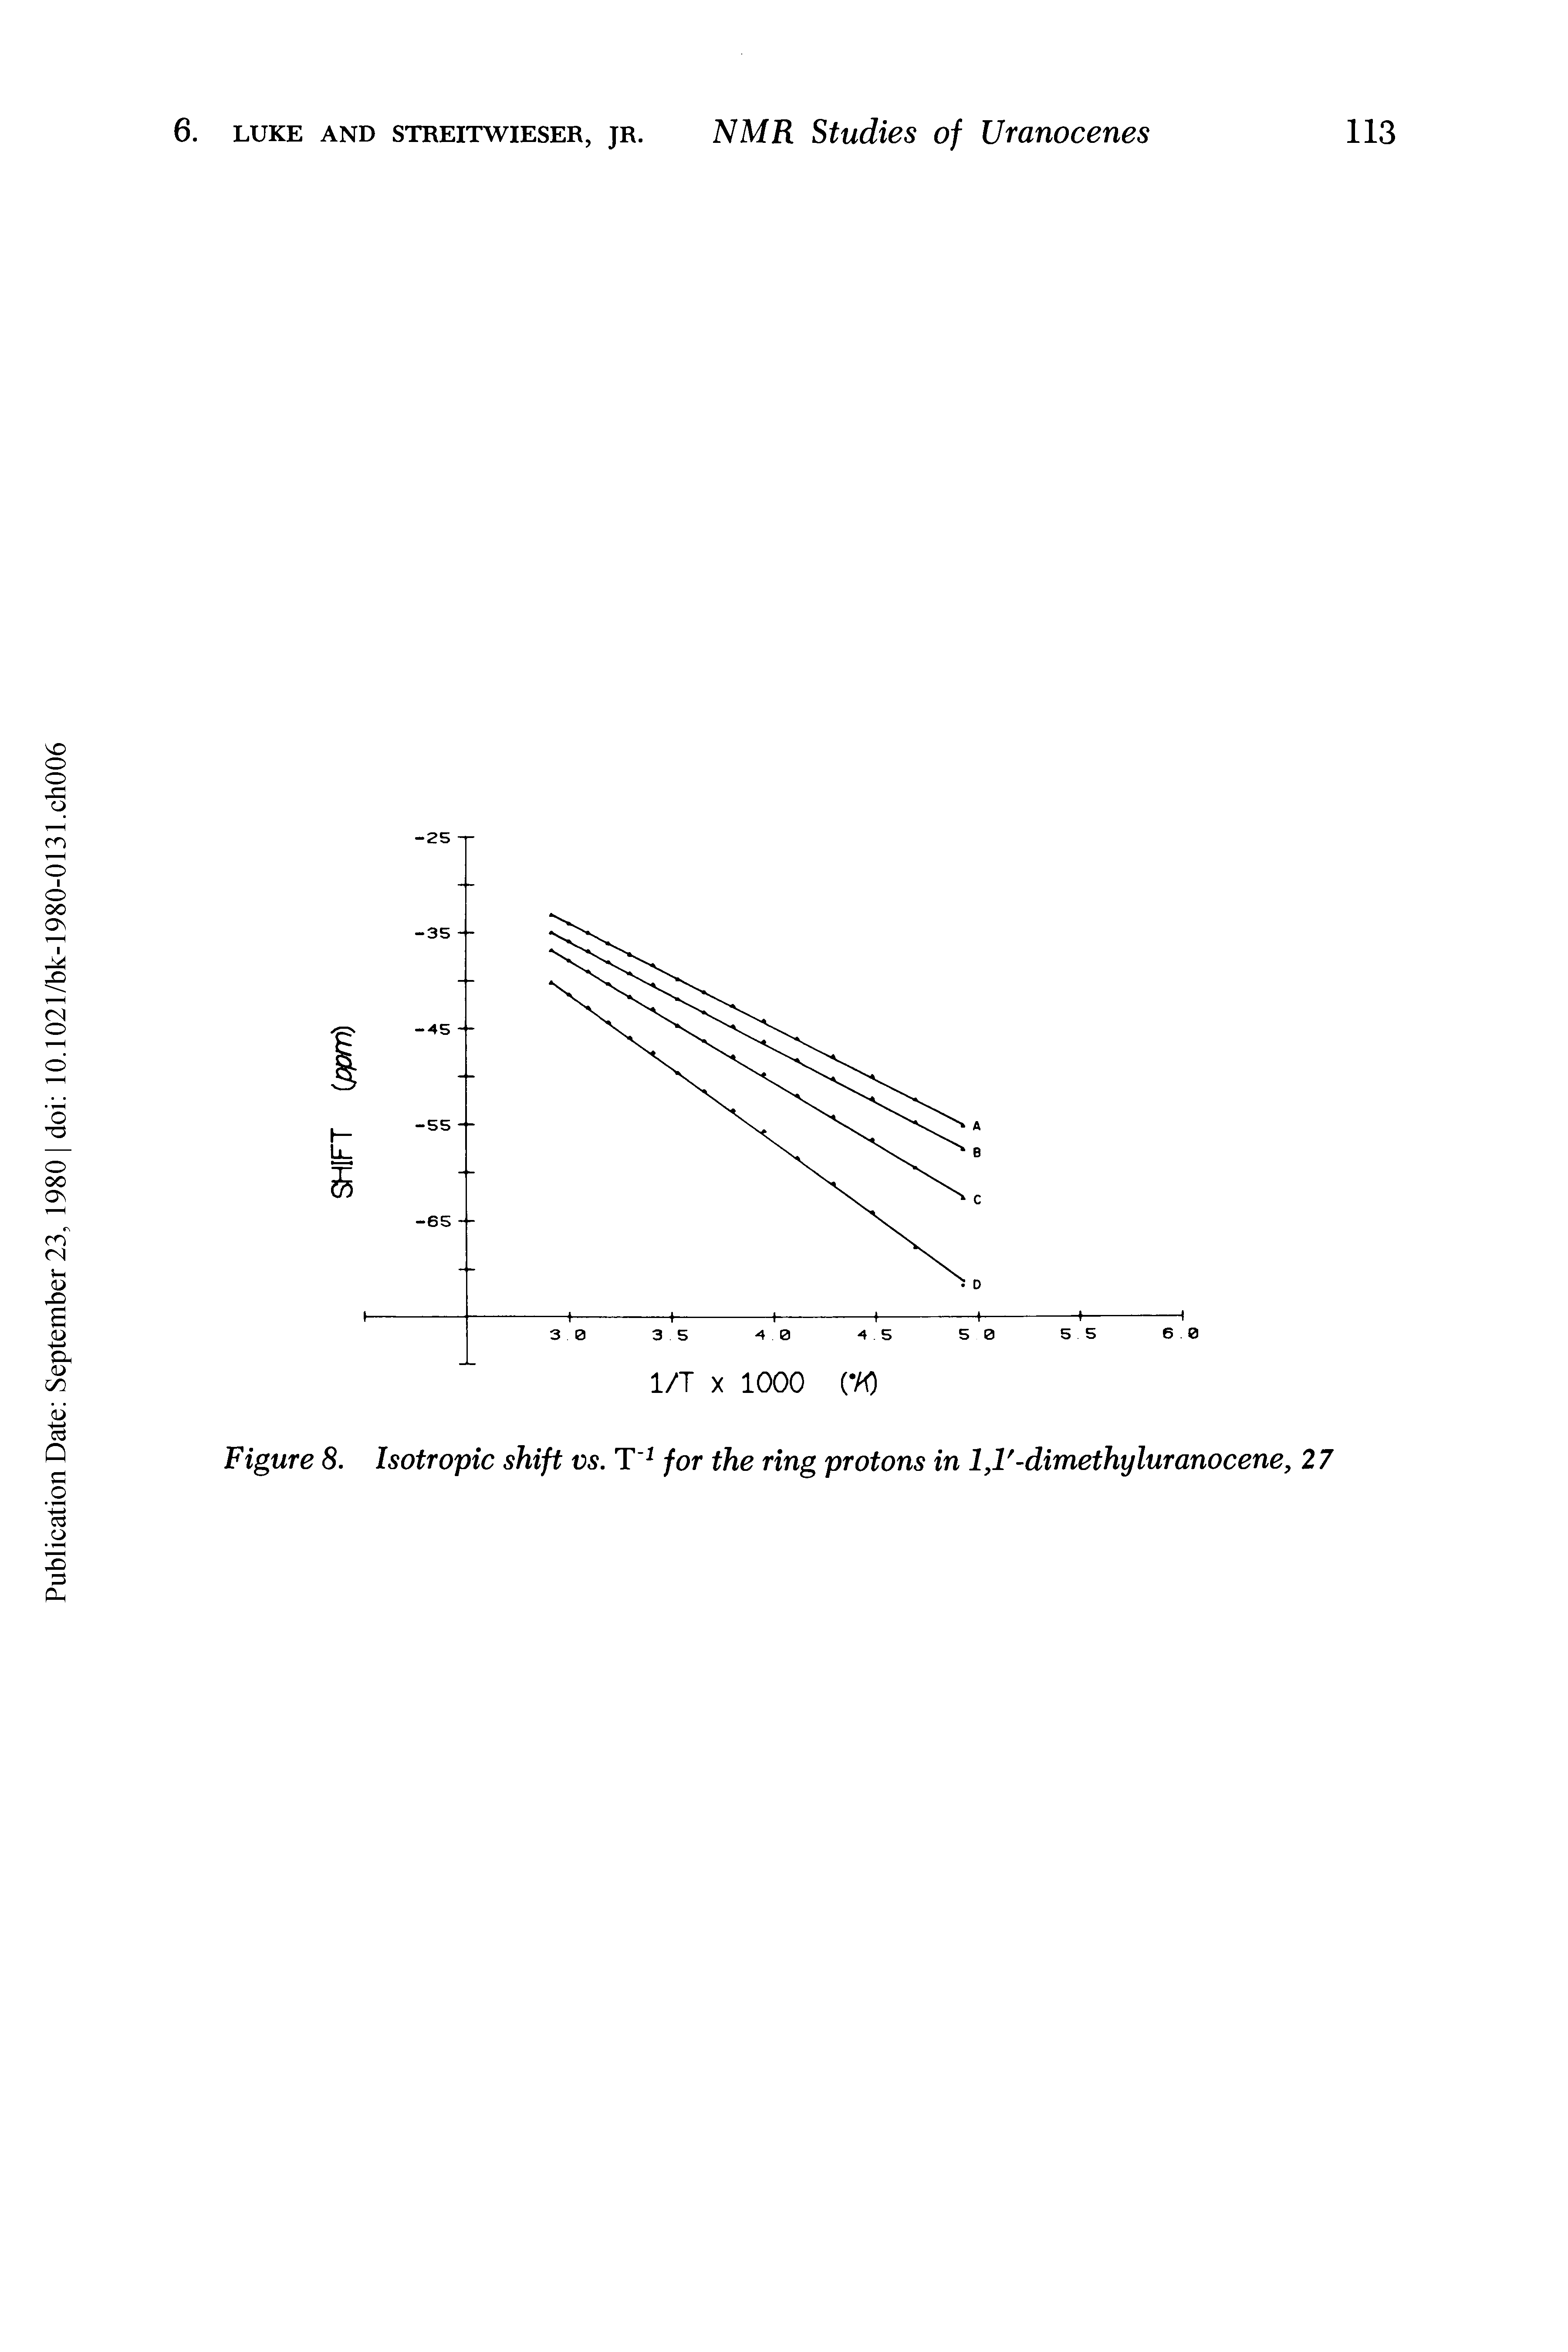 Figure 8. Isotropic shift vs. T1 for the ring protons in l,r-dimethyluranocene, 27...